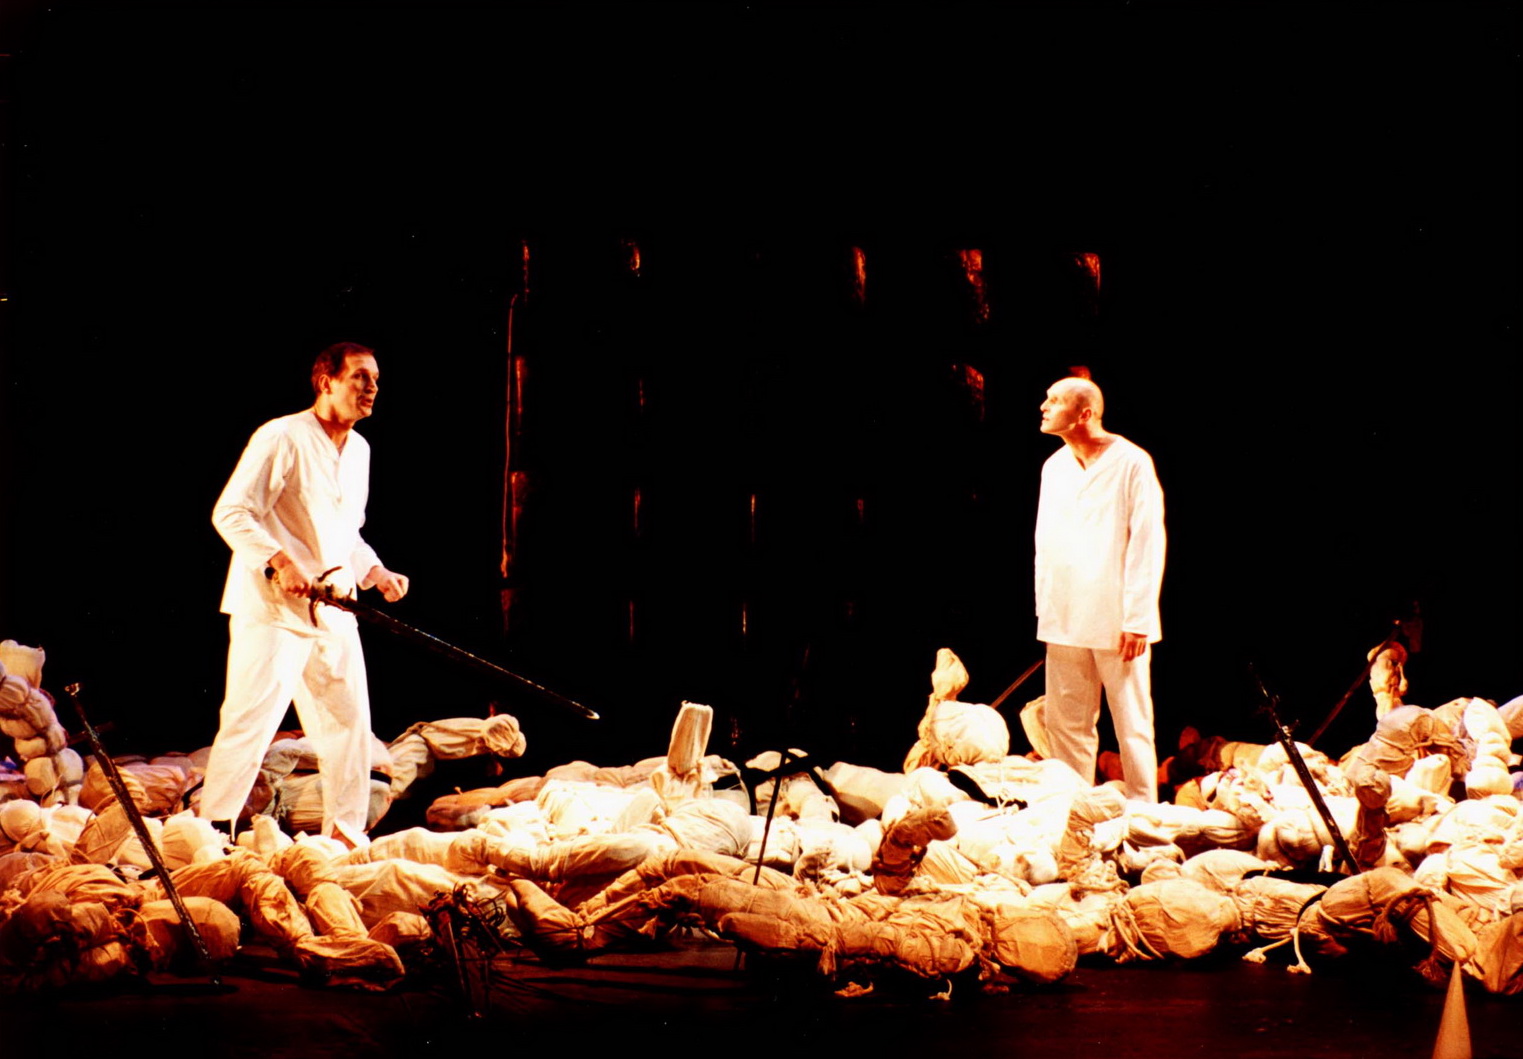 на фото - сцена из спектакля Бутусова "Макбетт". Фото с официального сайта театра "Сатирикон"